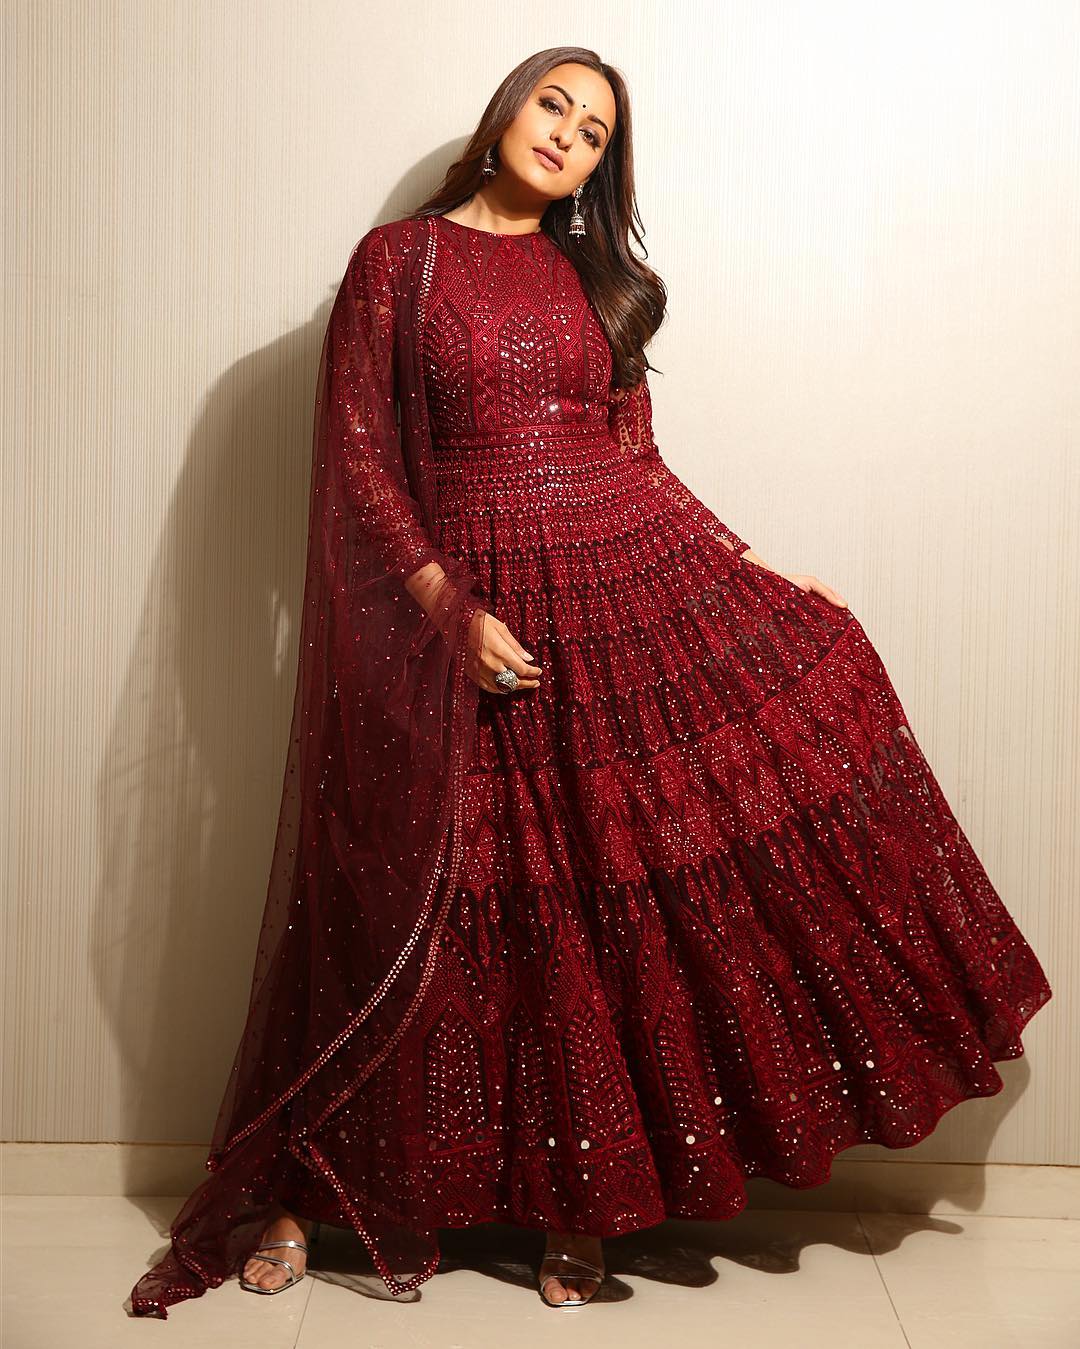 Designer Printed Suit of Sonakshi Sinha's Dresses